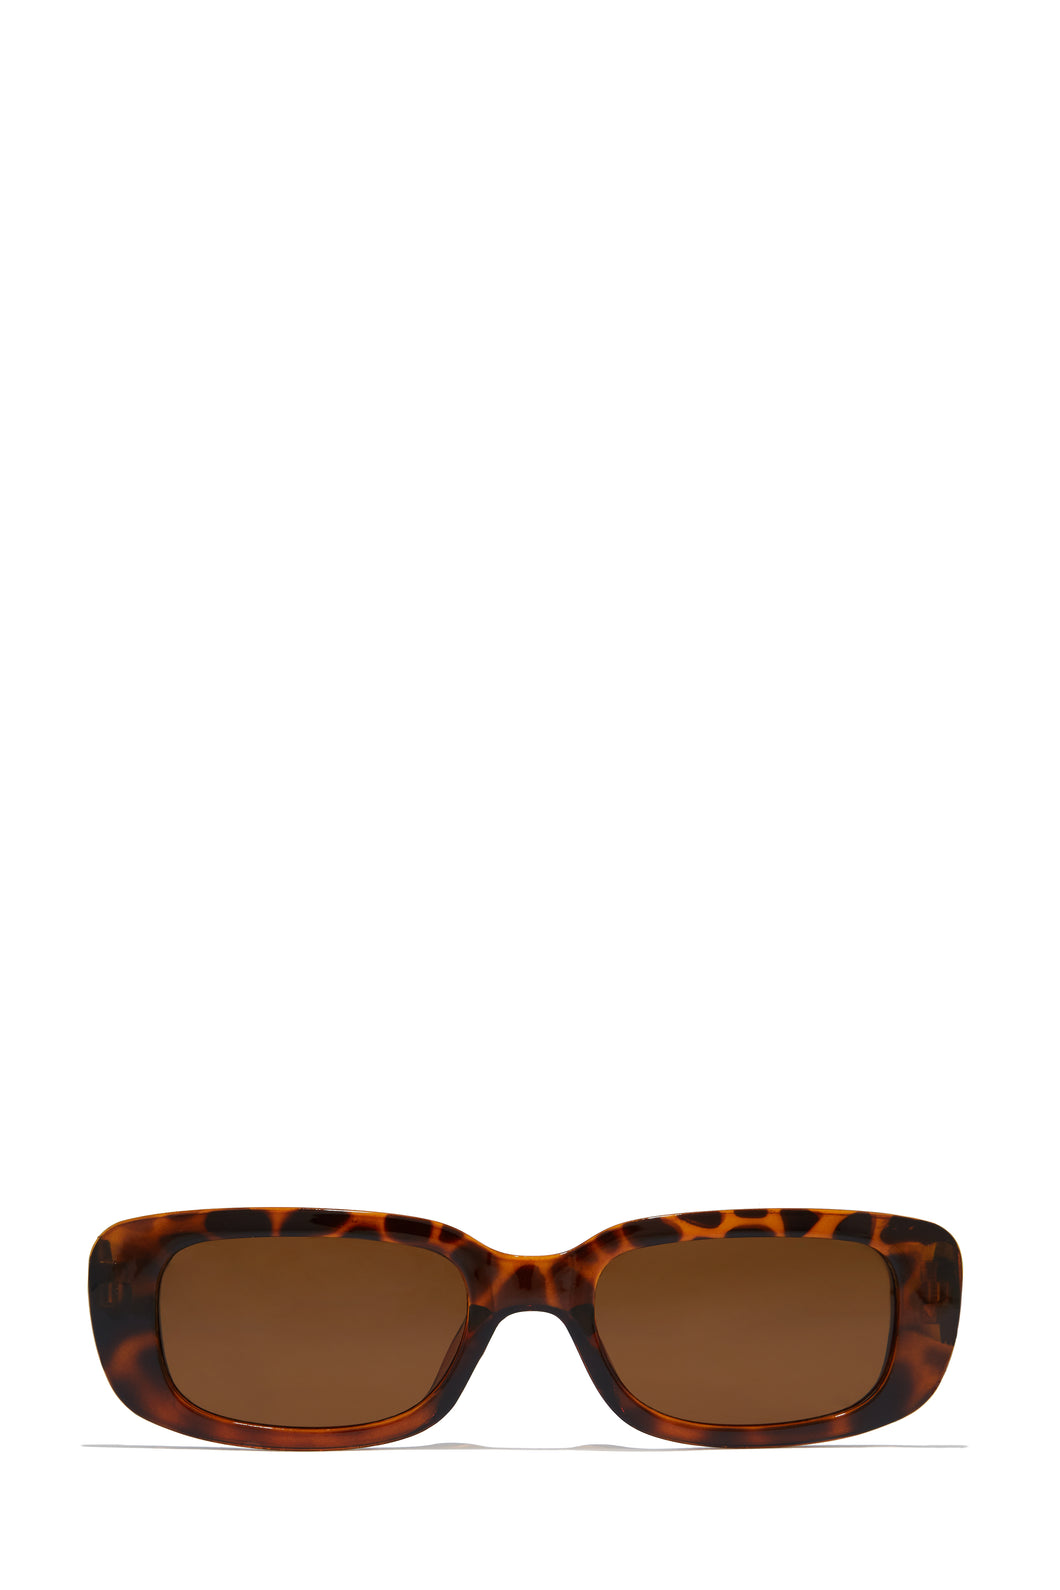 Black and Brown Tortoise Sunglasses